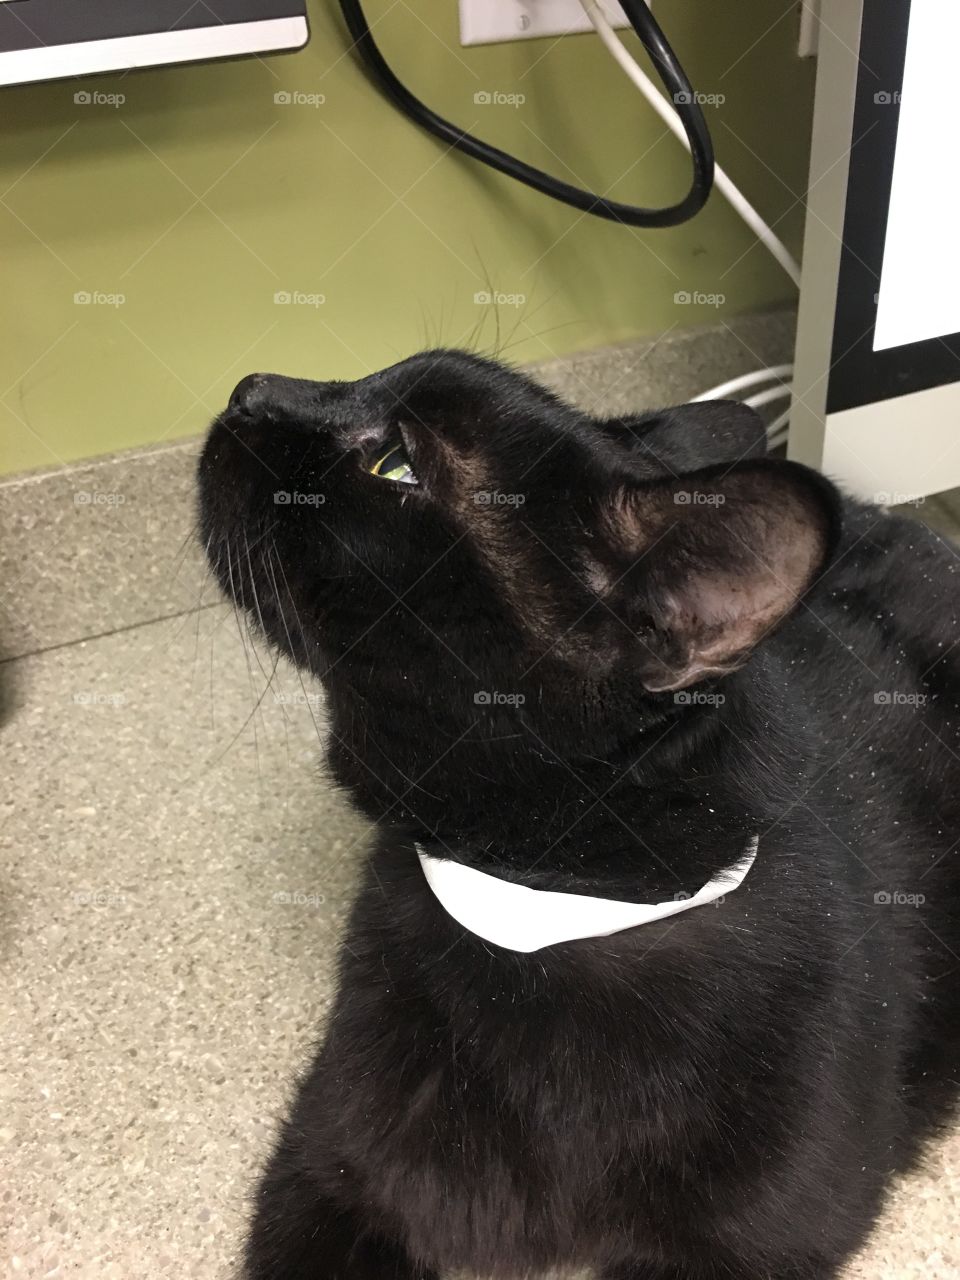 Diabetic cat medical boarder in veterinary hospital